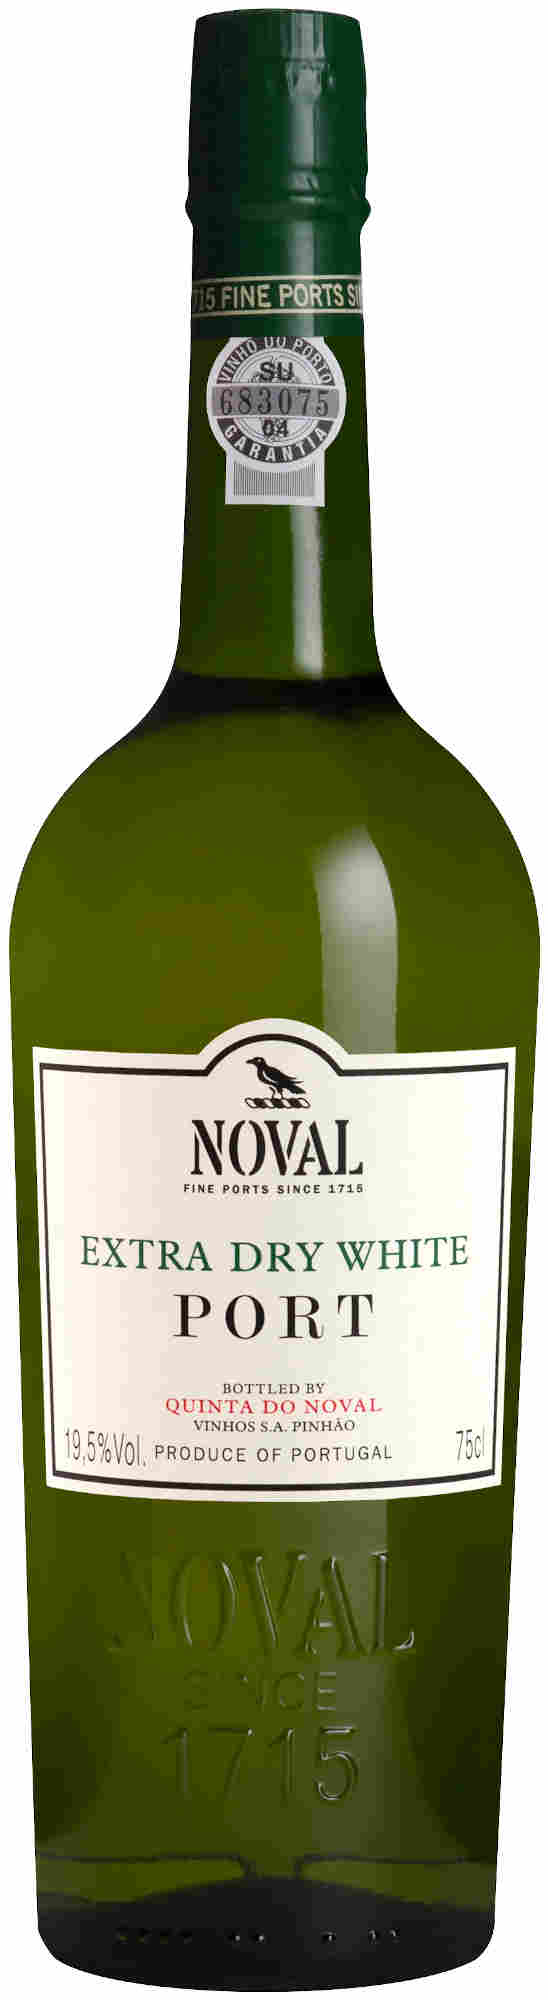 Noval-Extra-Dry-White-Port